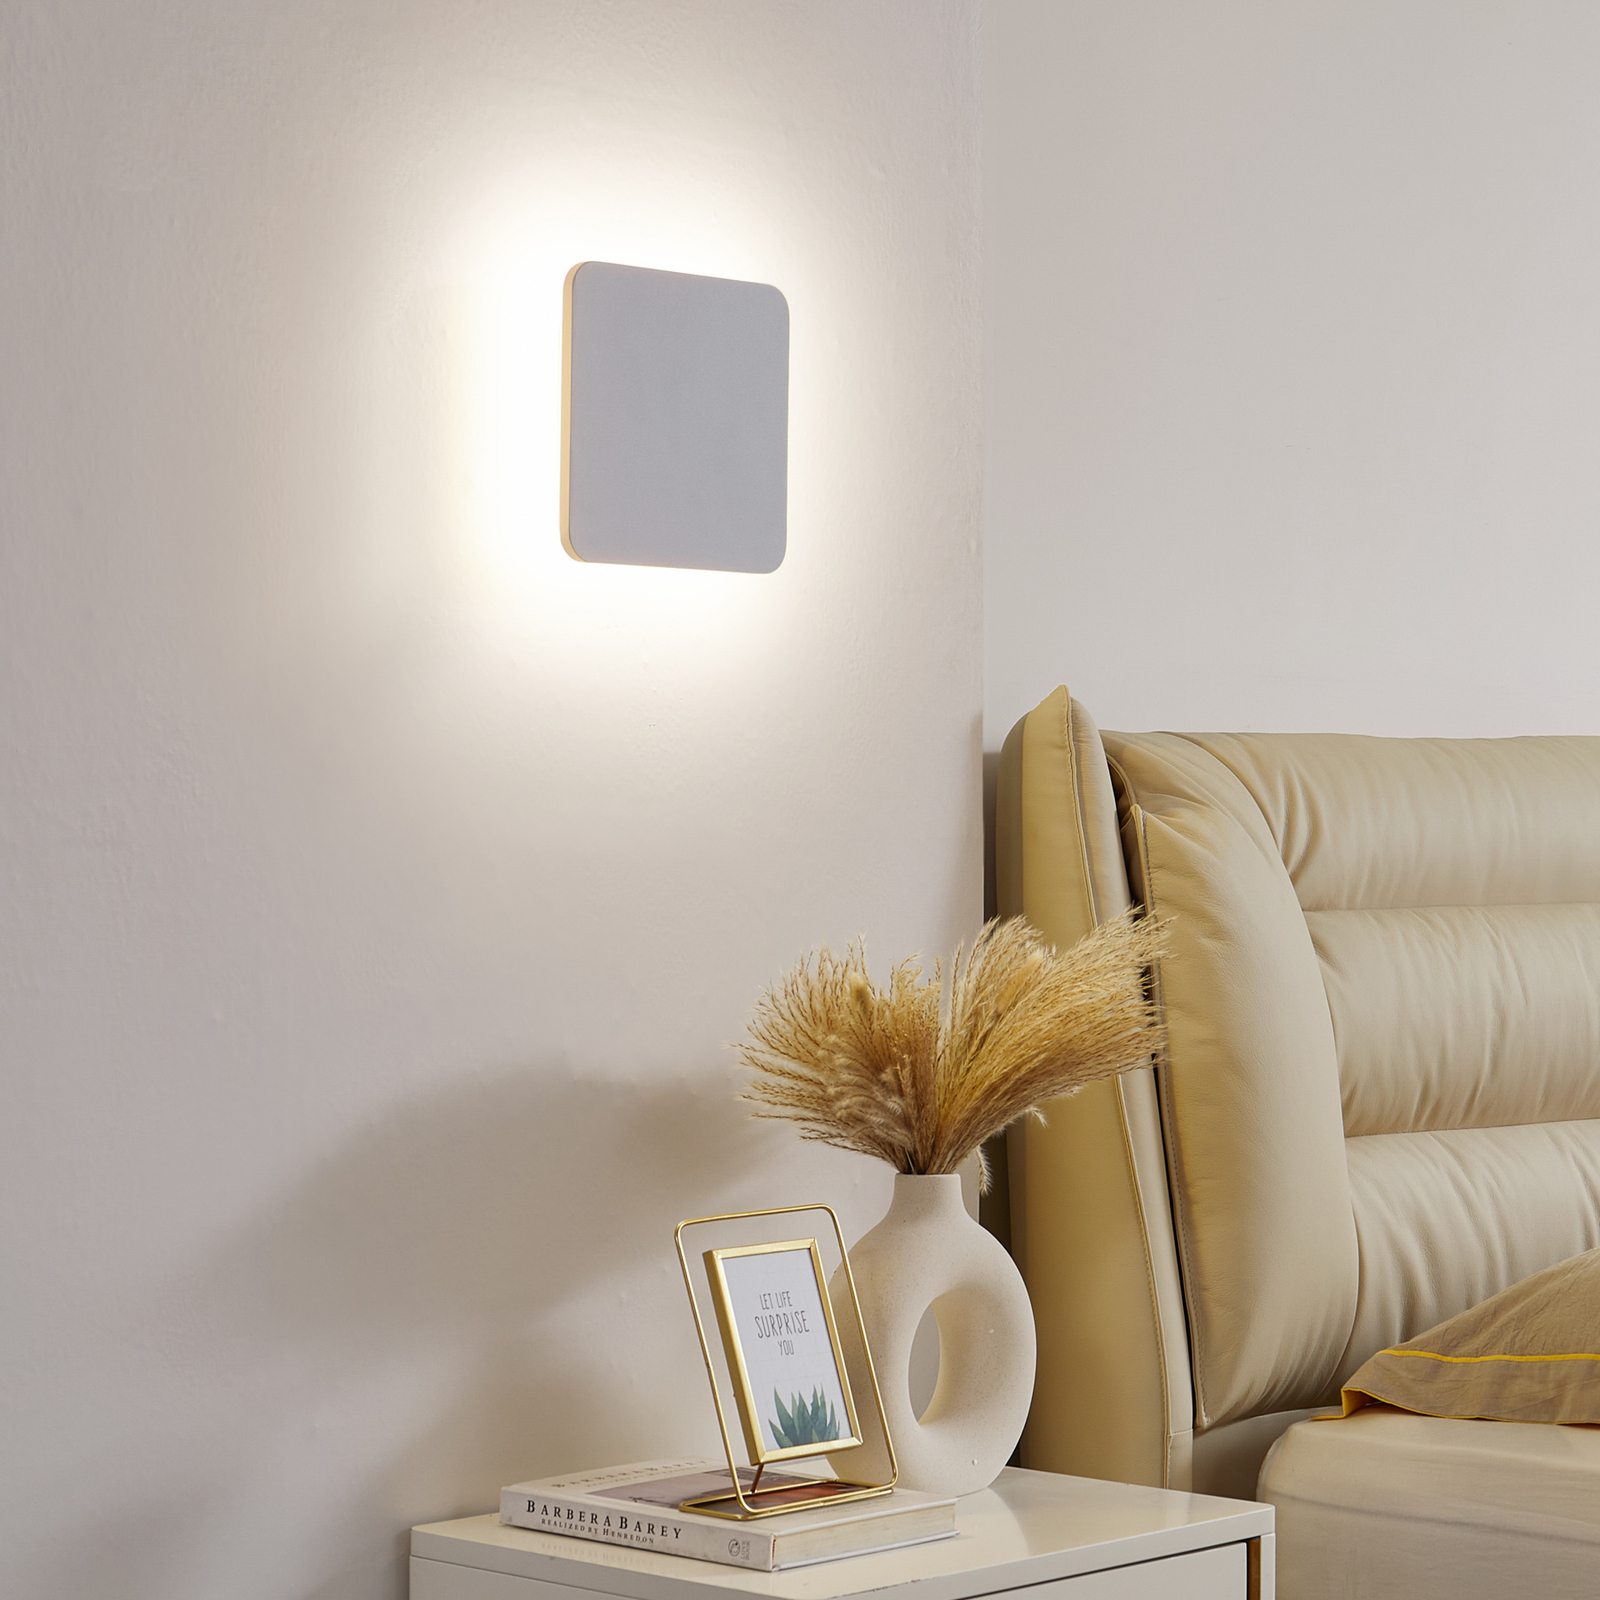 Lucande LED wall light Elrik, branco, 22 cm de altura, metal